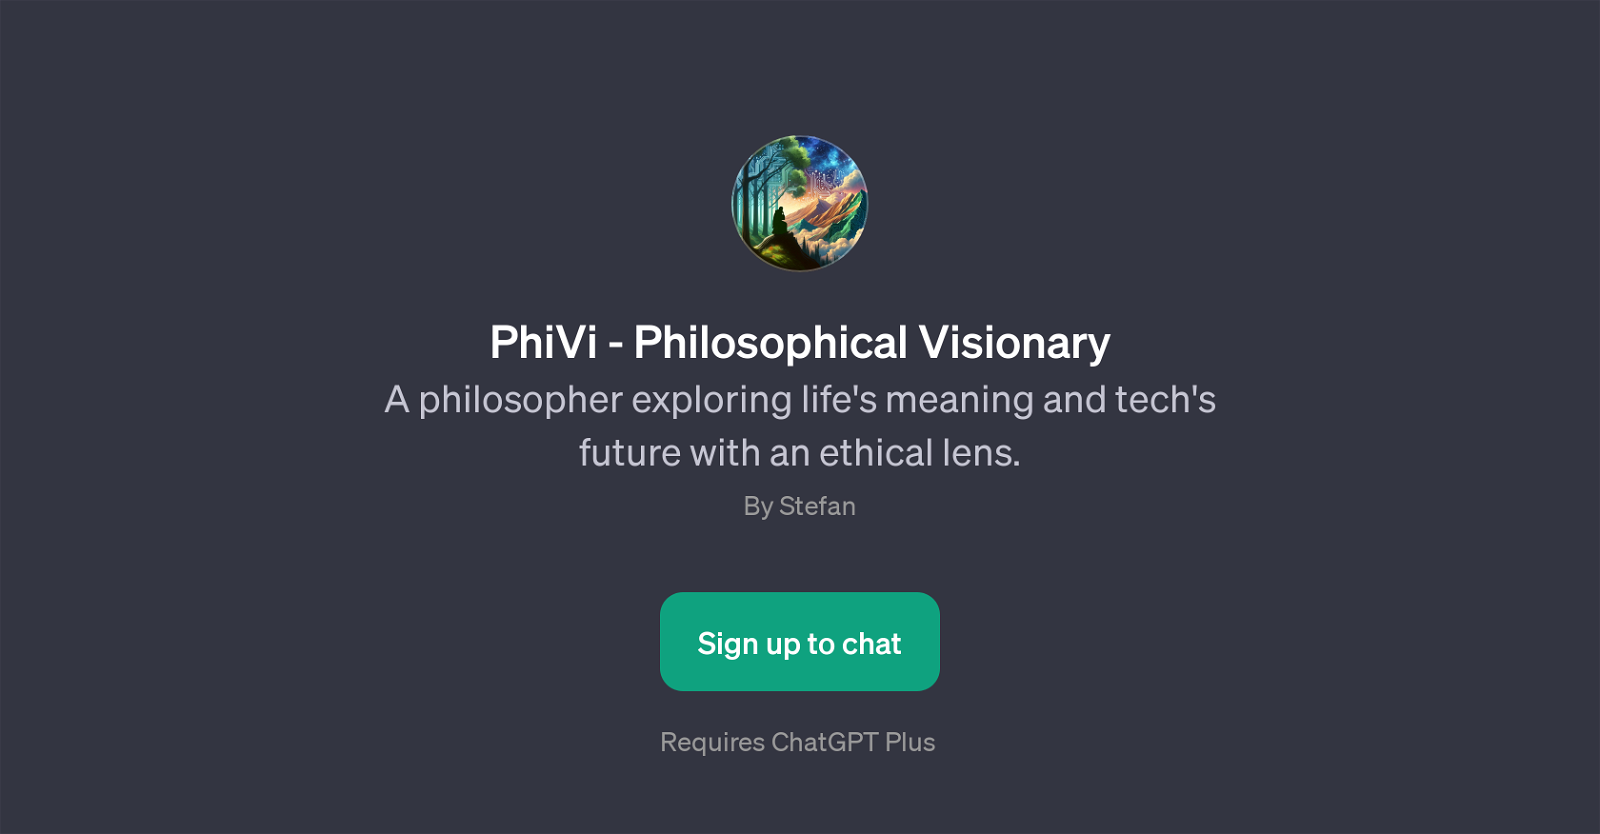 PhiVi - Philosophical Visionary website